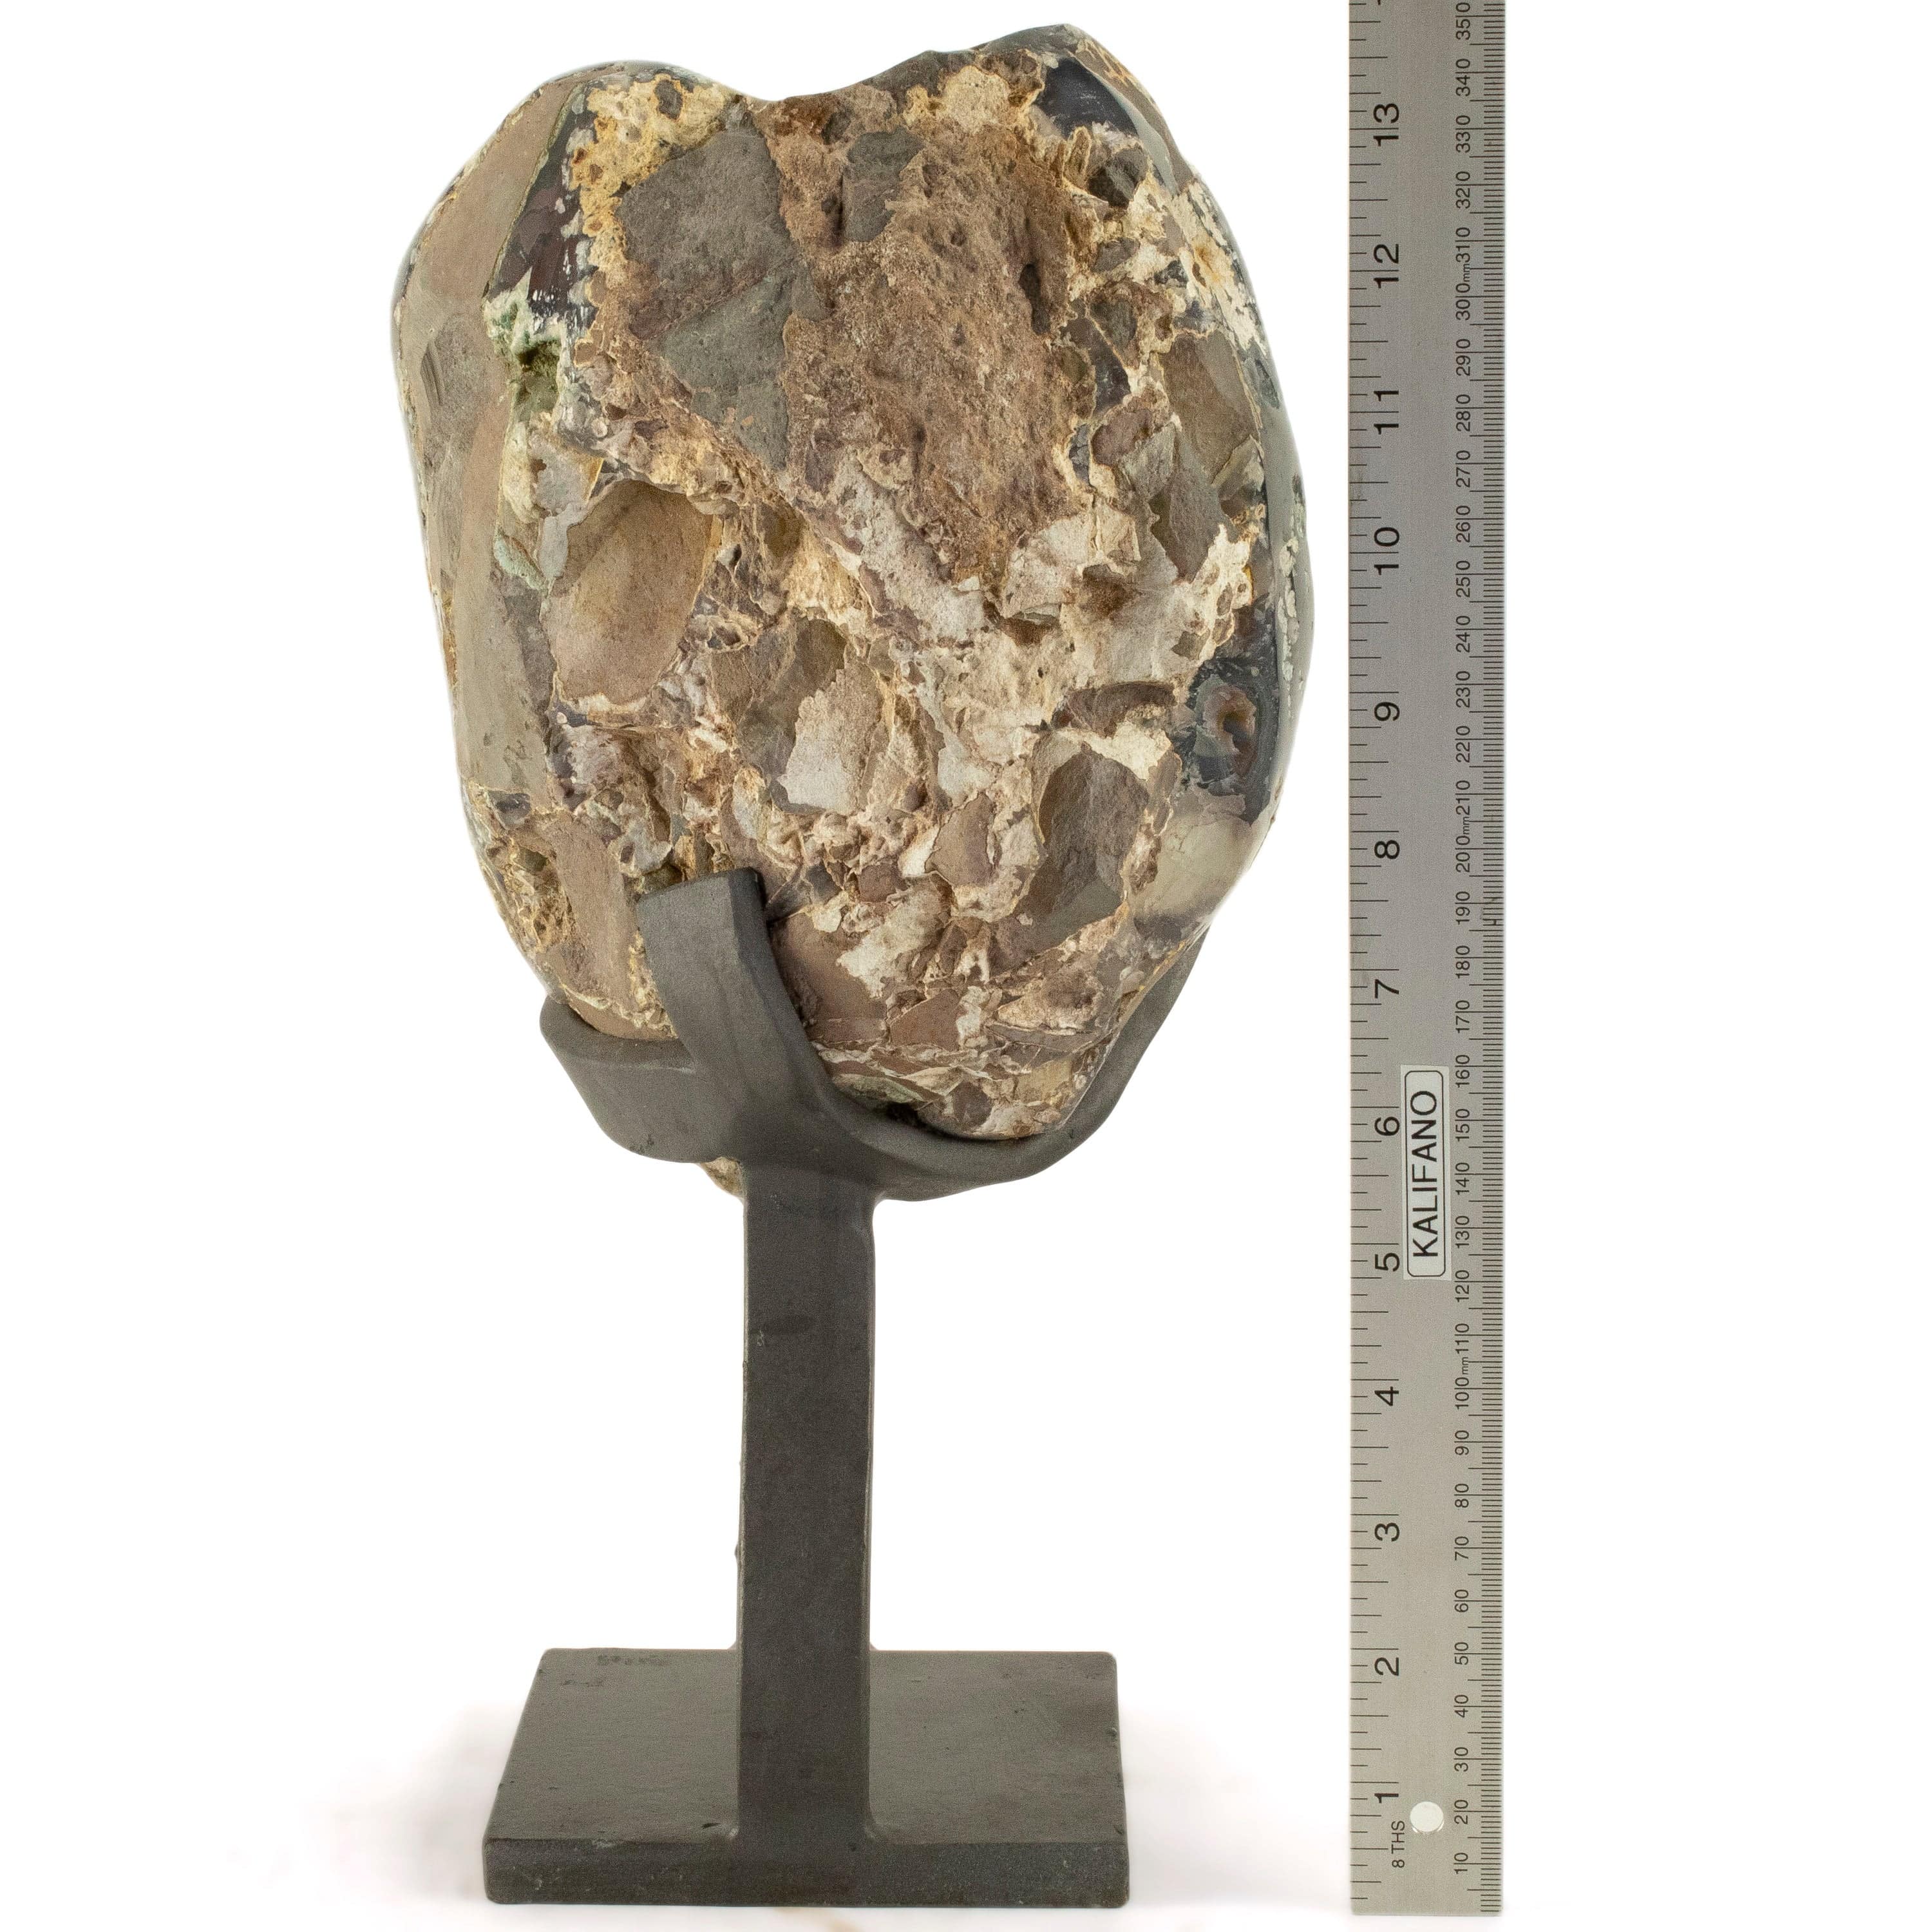 Kalifano Amethyst Uruguayan Amethyst Geode on Custom Stand - 15.6 lbs / 13.5 in. UAG3550.001